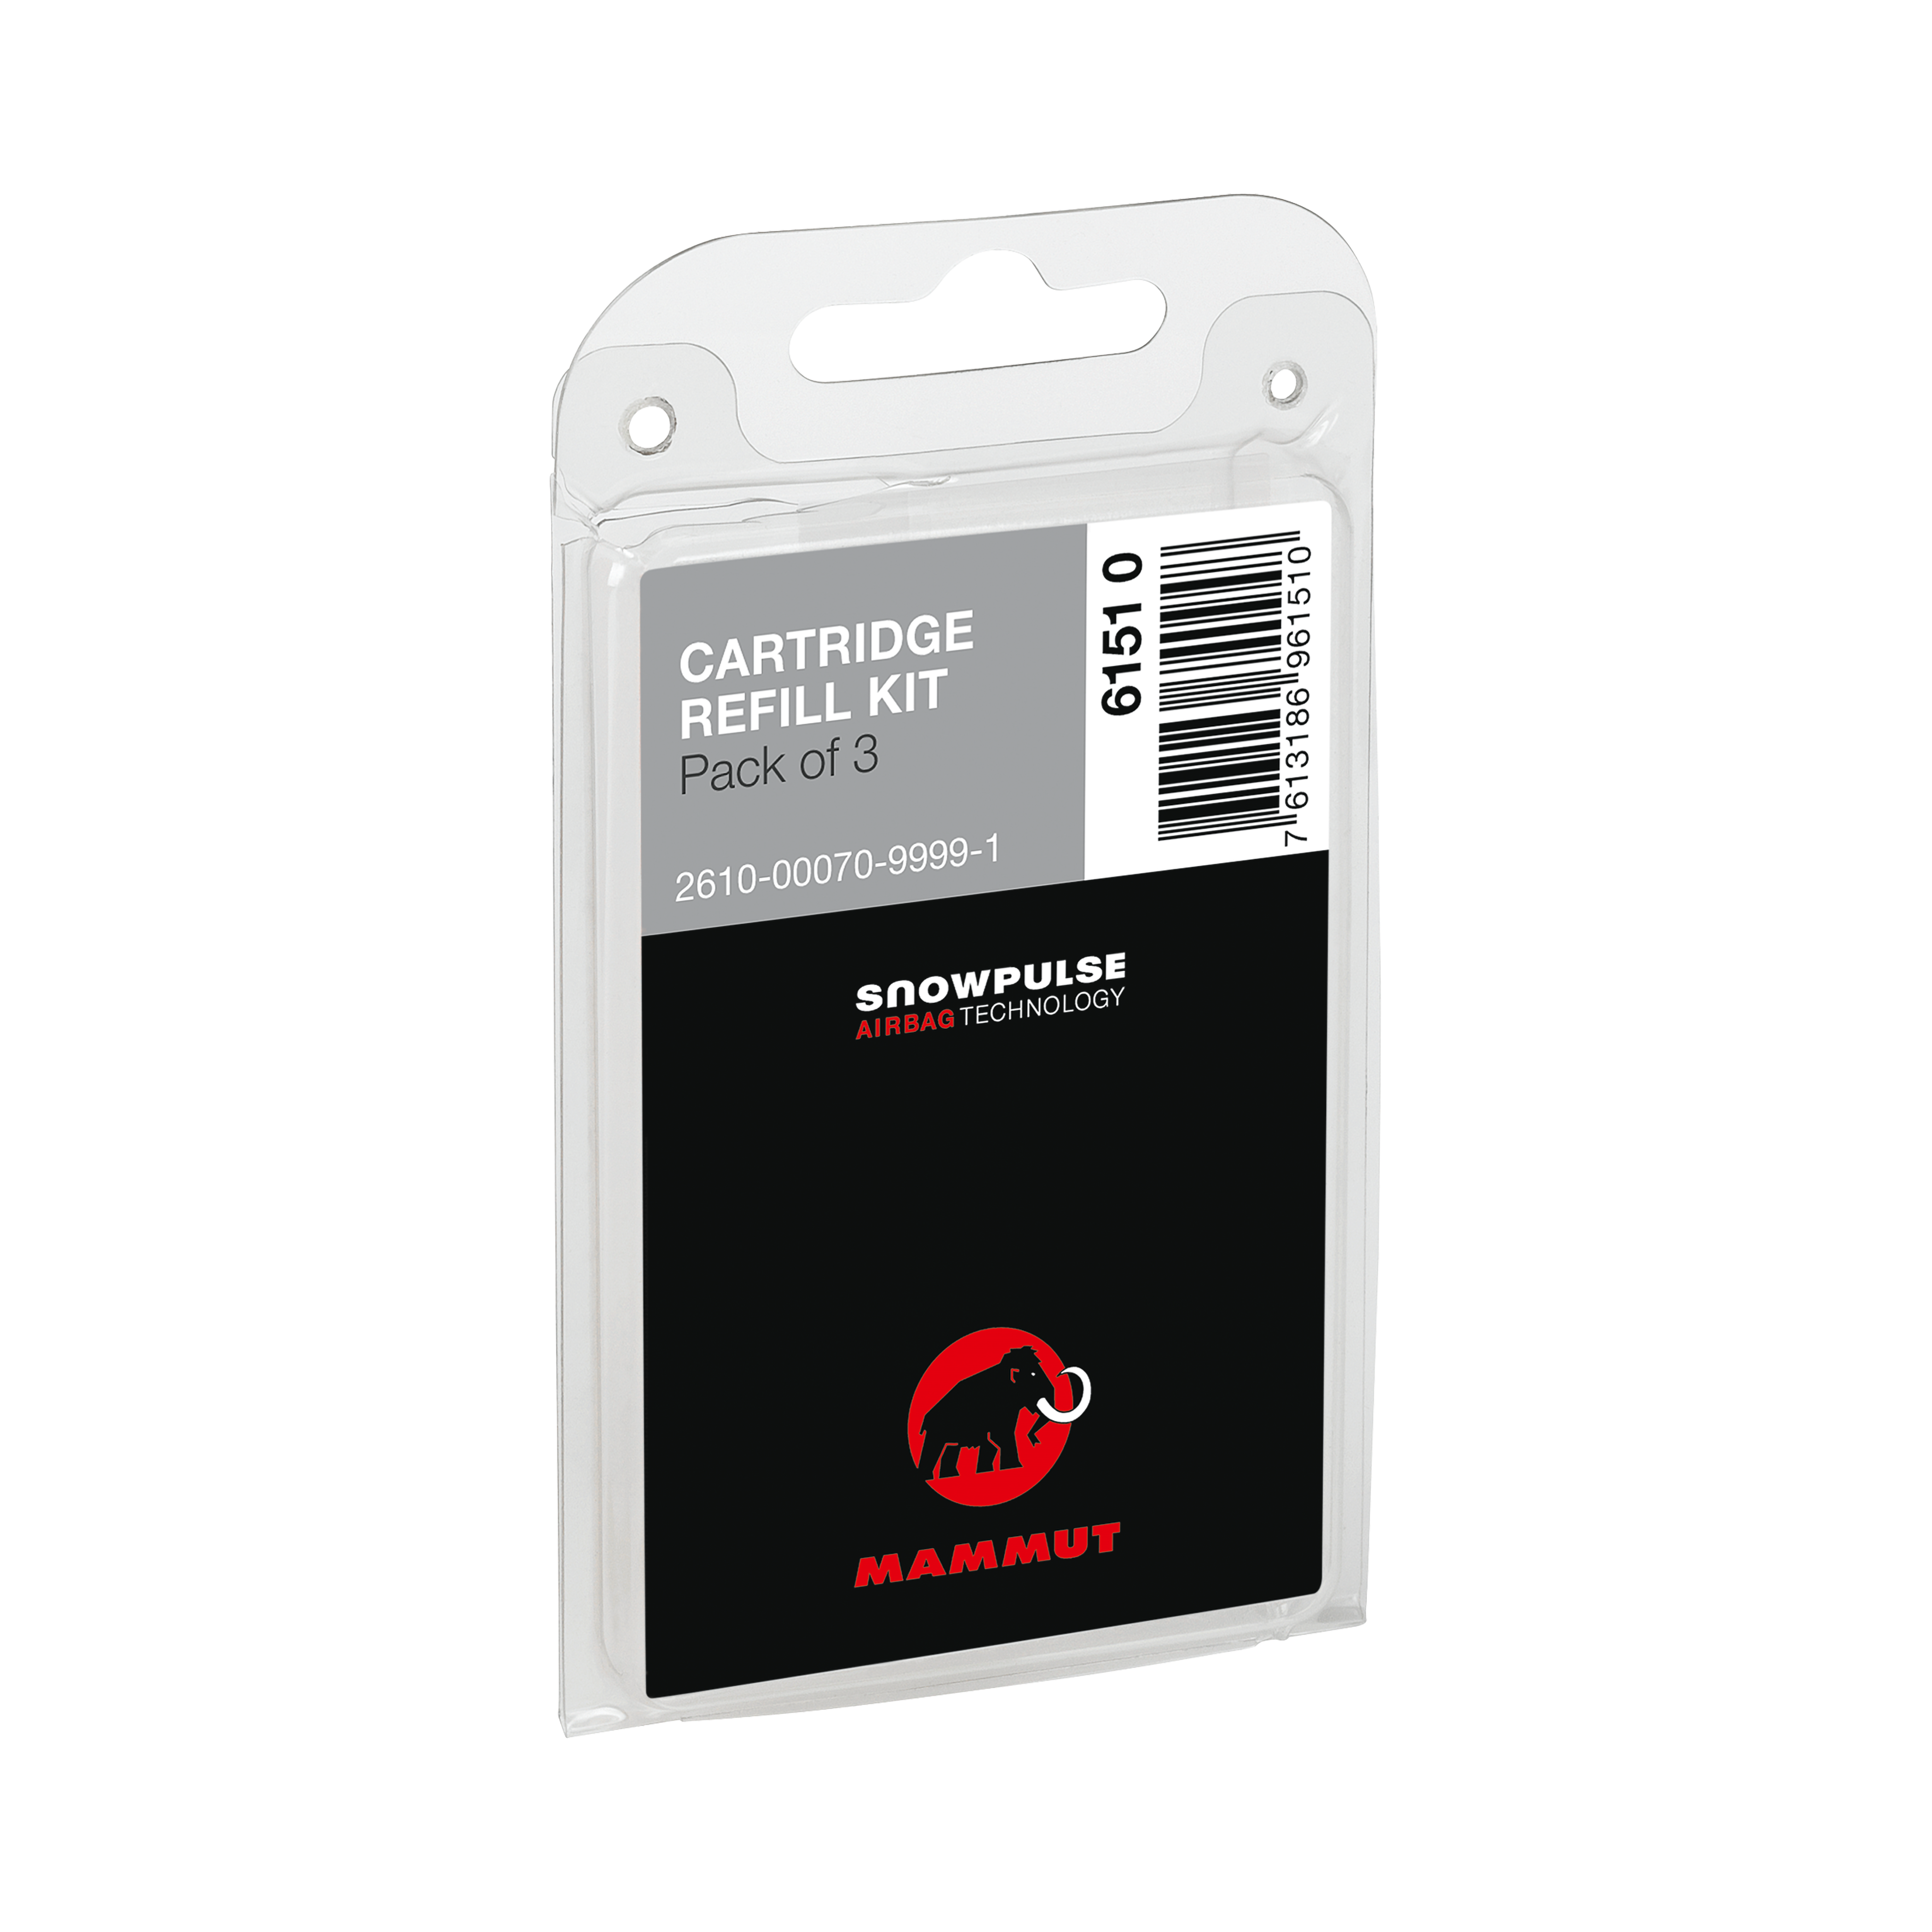 Cartridge Refill Kit (Pack of 3) - Neutral thumbnail